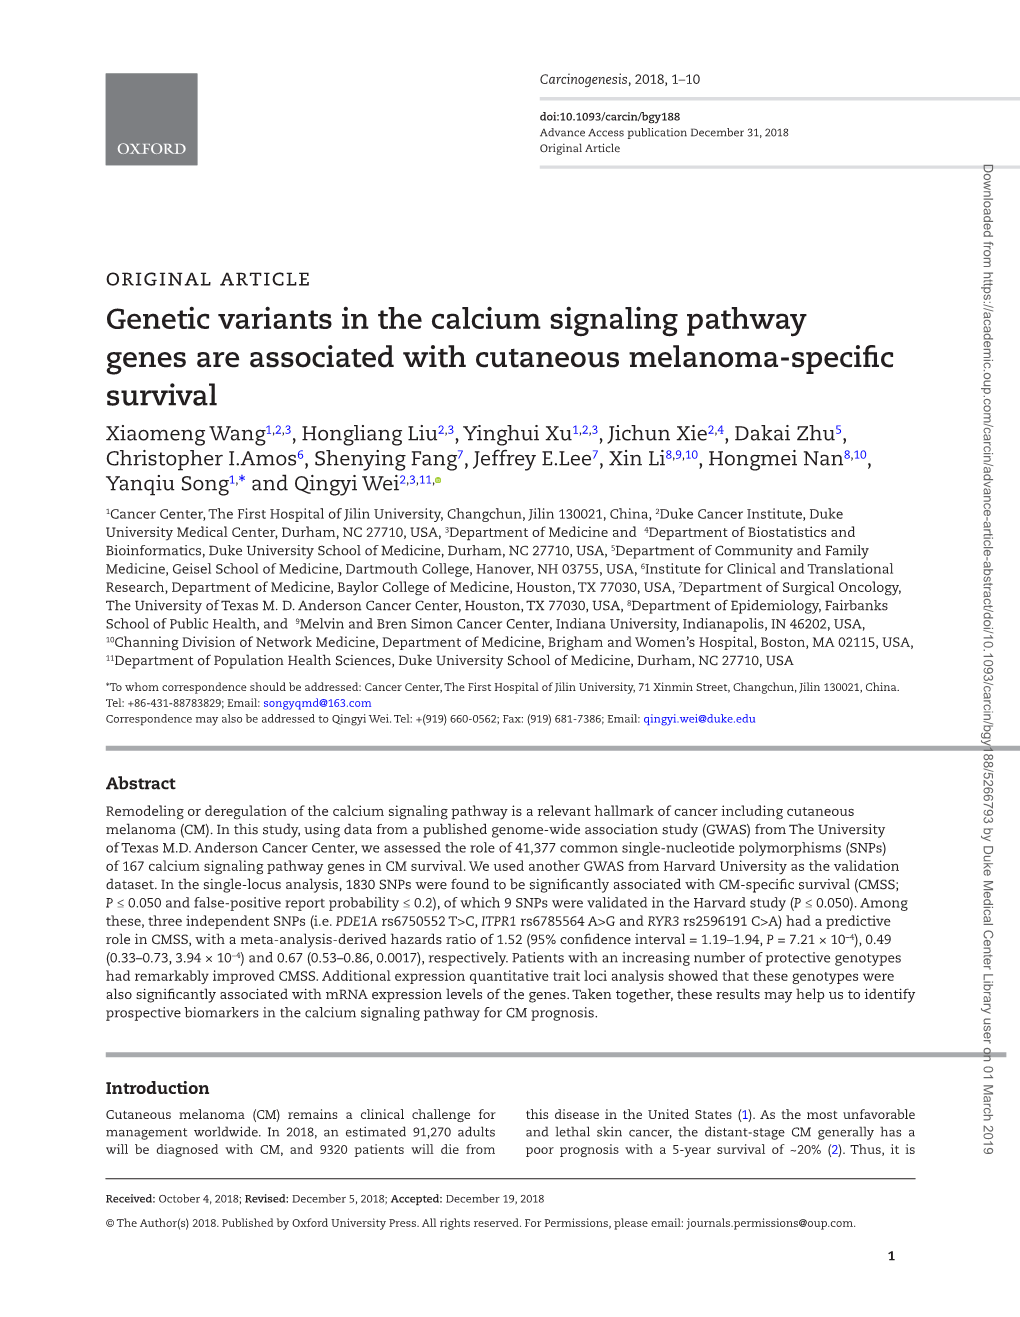 Genetic Variants in the Calcium Signaling Pathway Genes Are